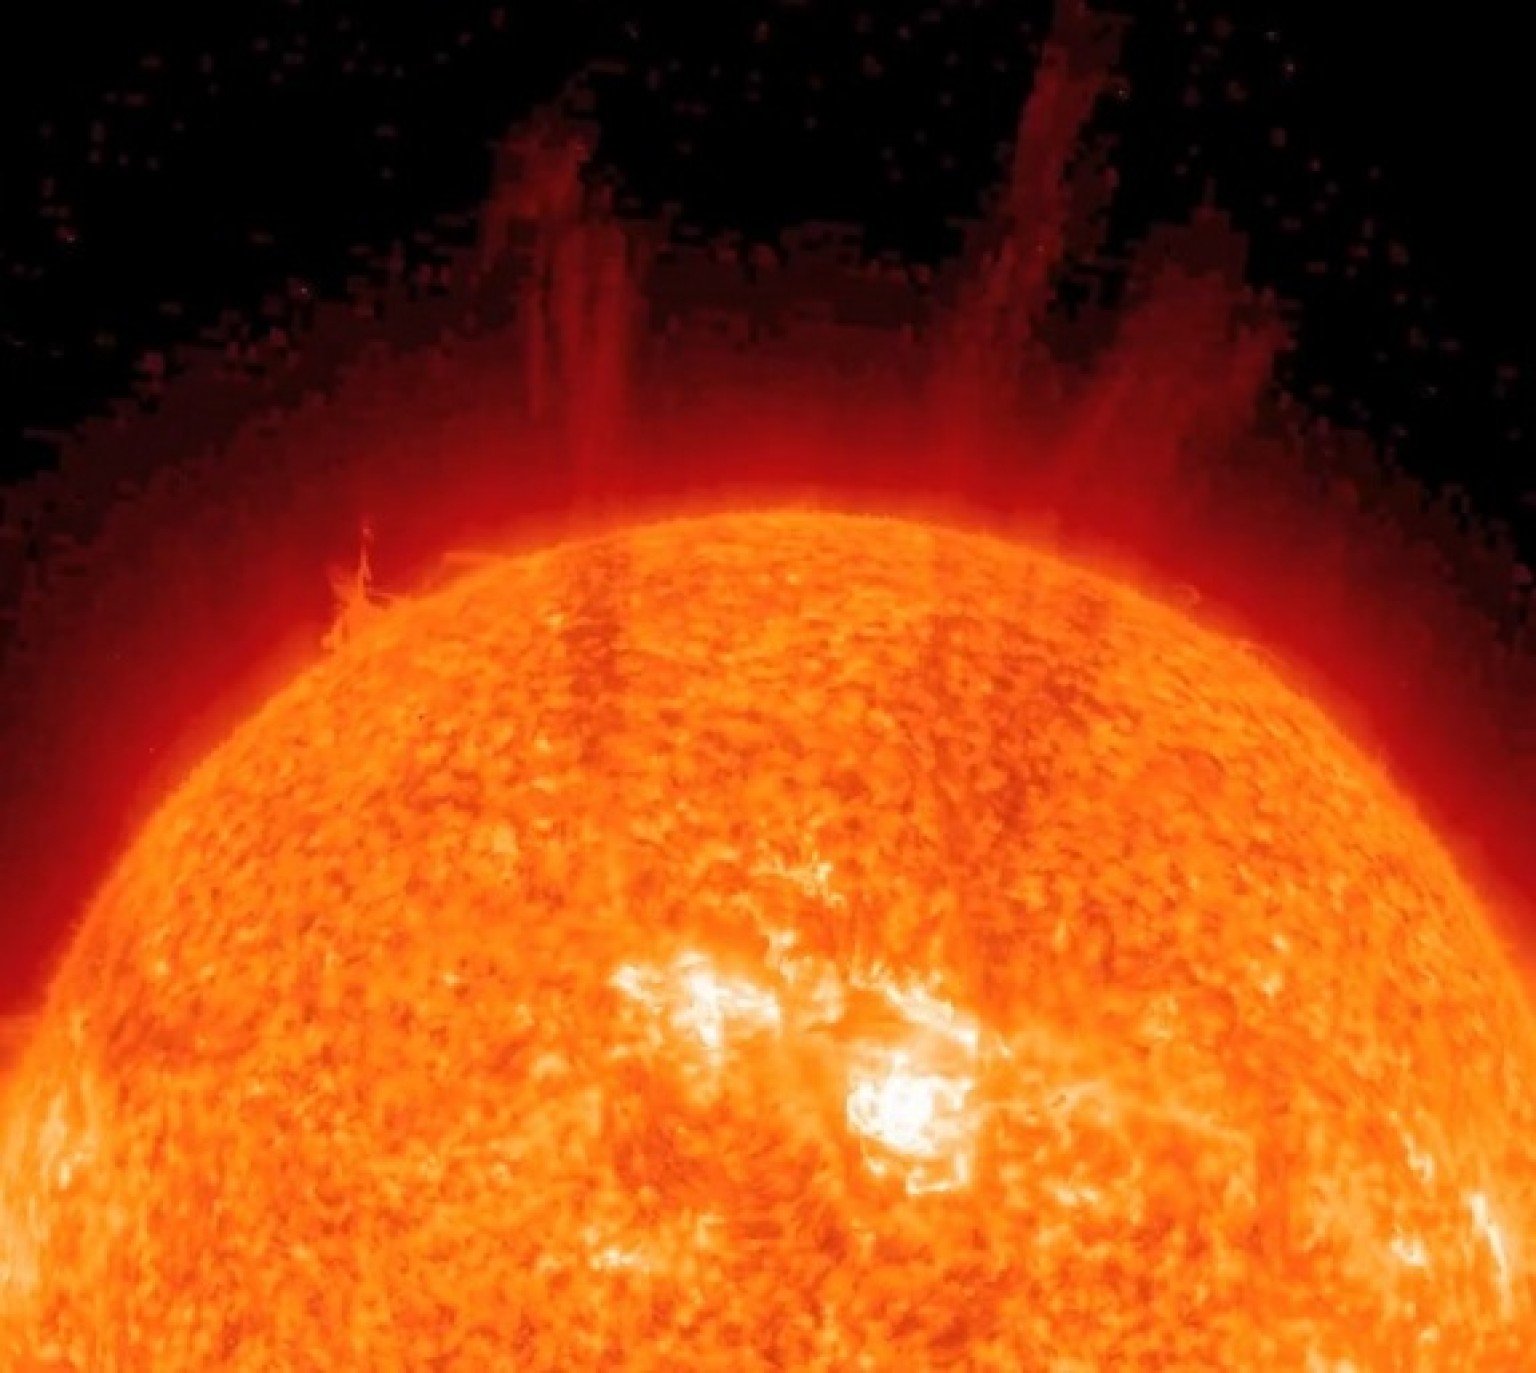 Солнечная атмосфера и солнечная активность. Плазма солнца. Протуберанцы на солнце. Плазменное солнце. Атмосфера солнца.